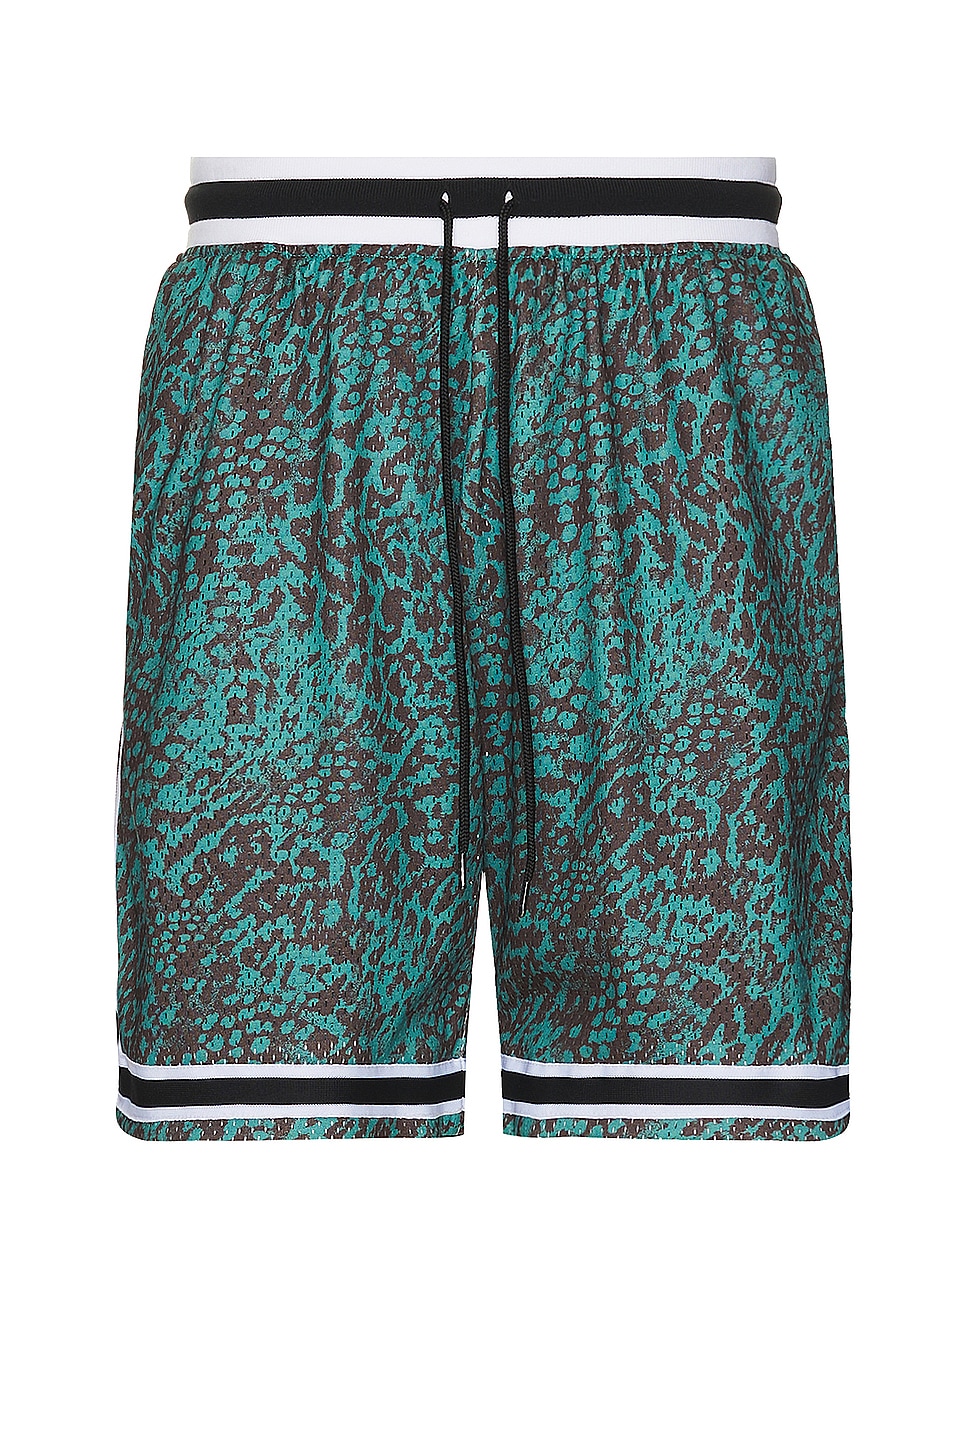 Image 1 of JOHN ELLIOTT Game Shorts in Turquoise Leopard